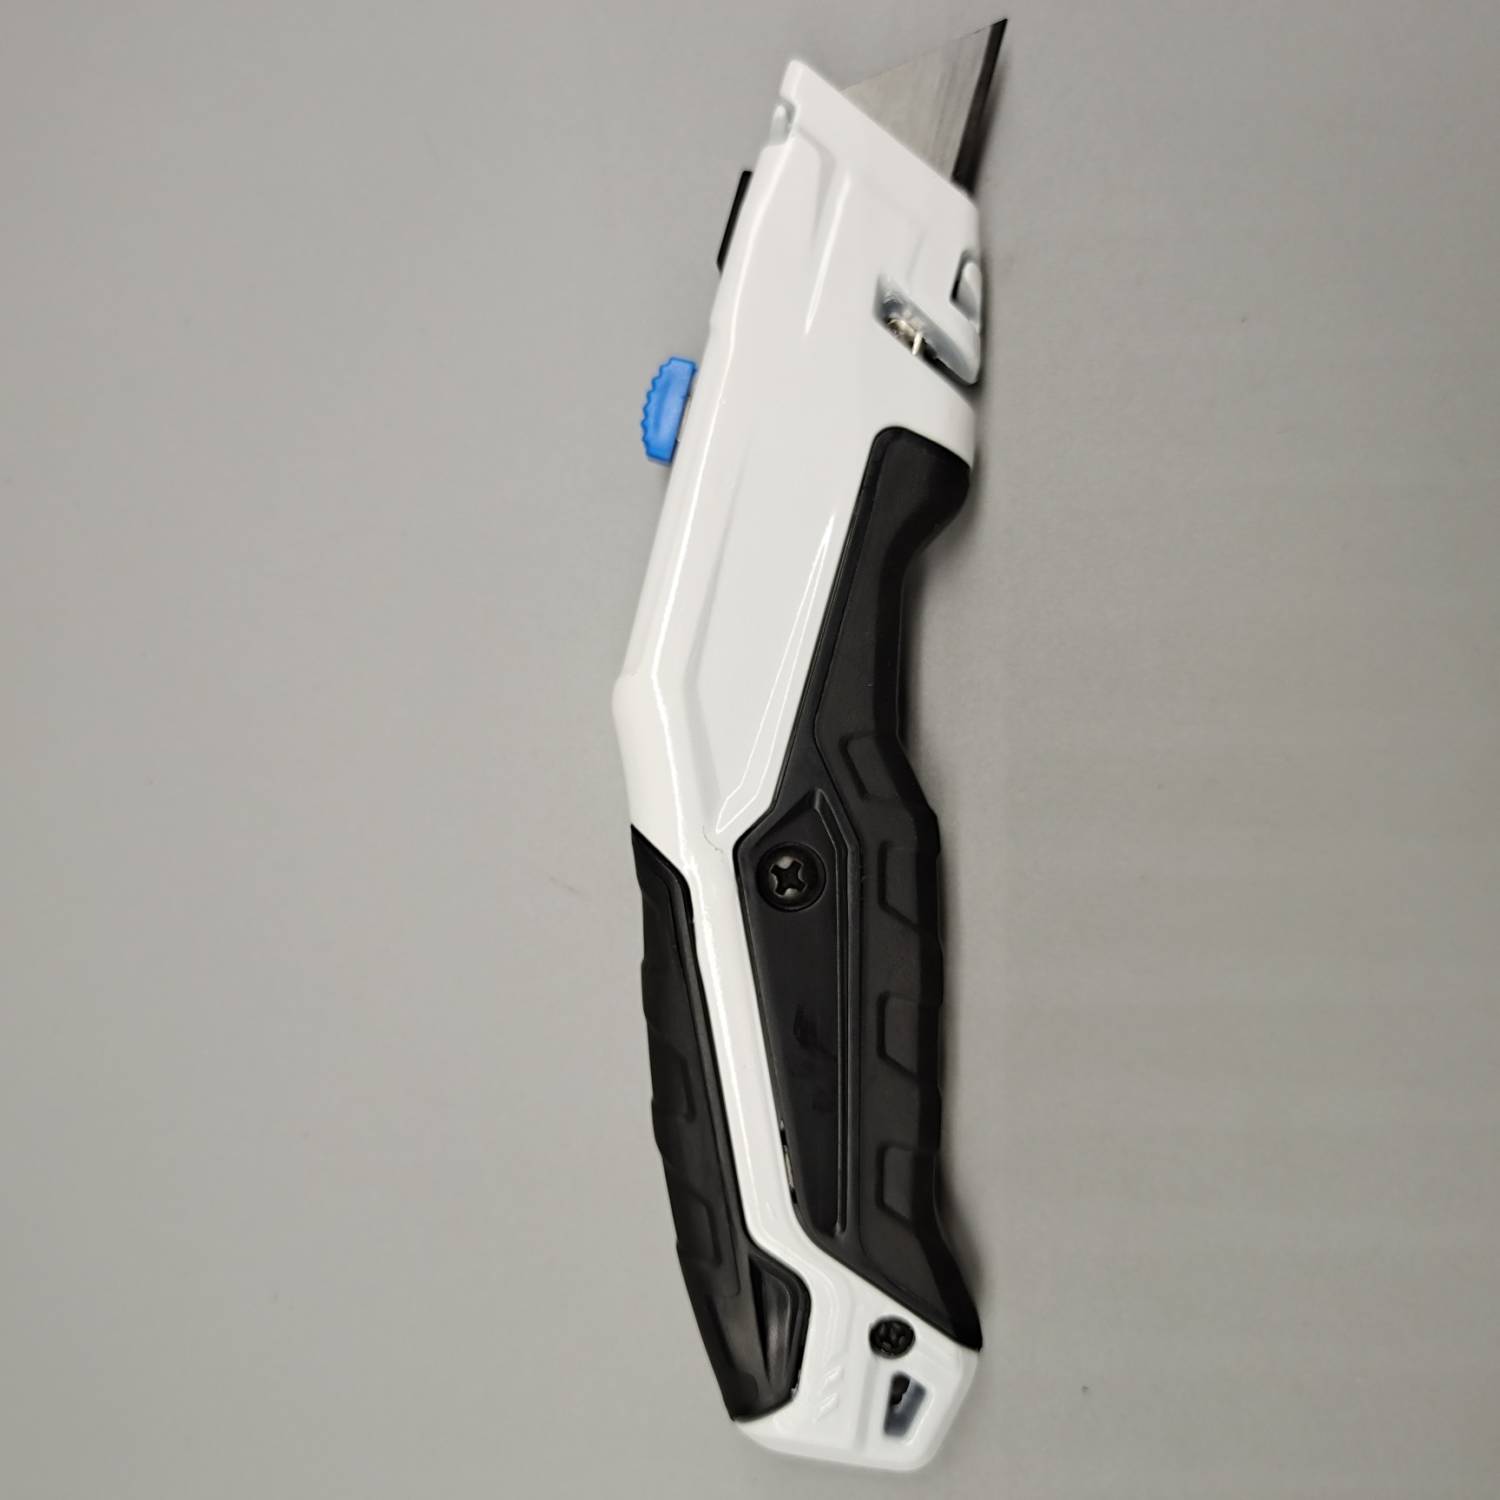 Solid Blade Premium Artificial Turf Cutter